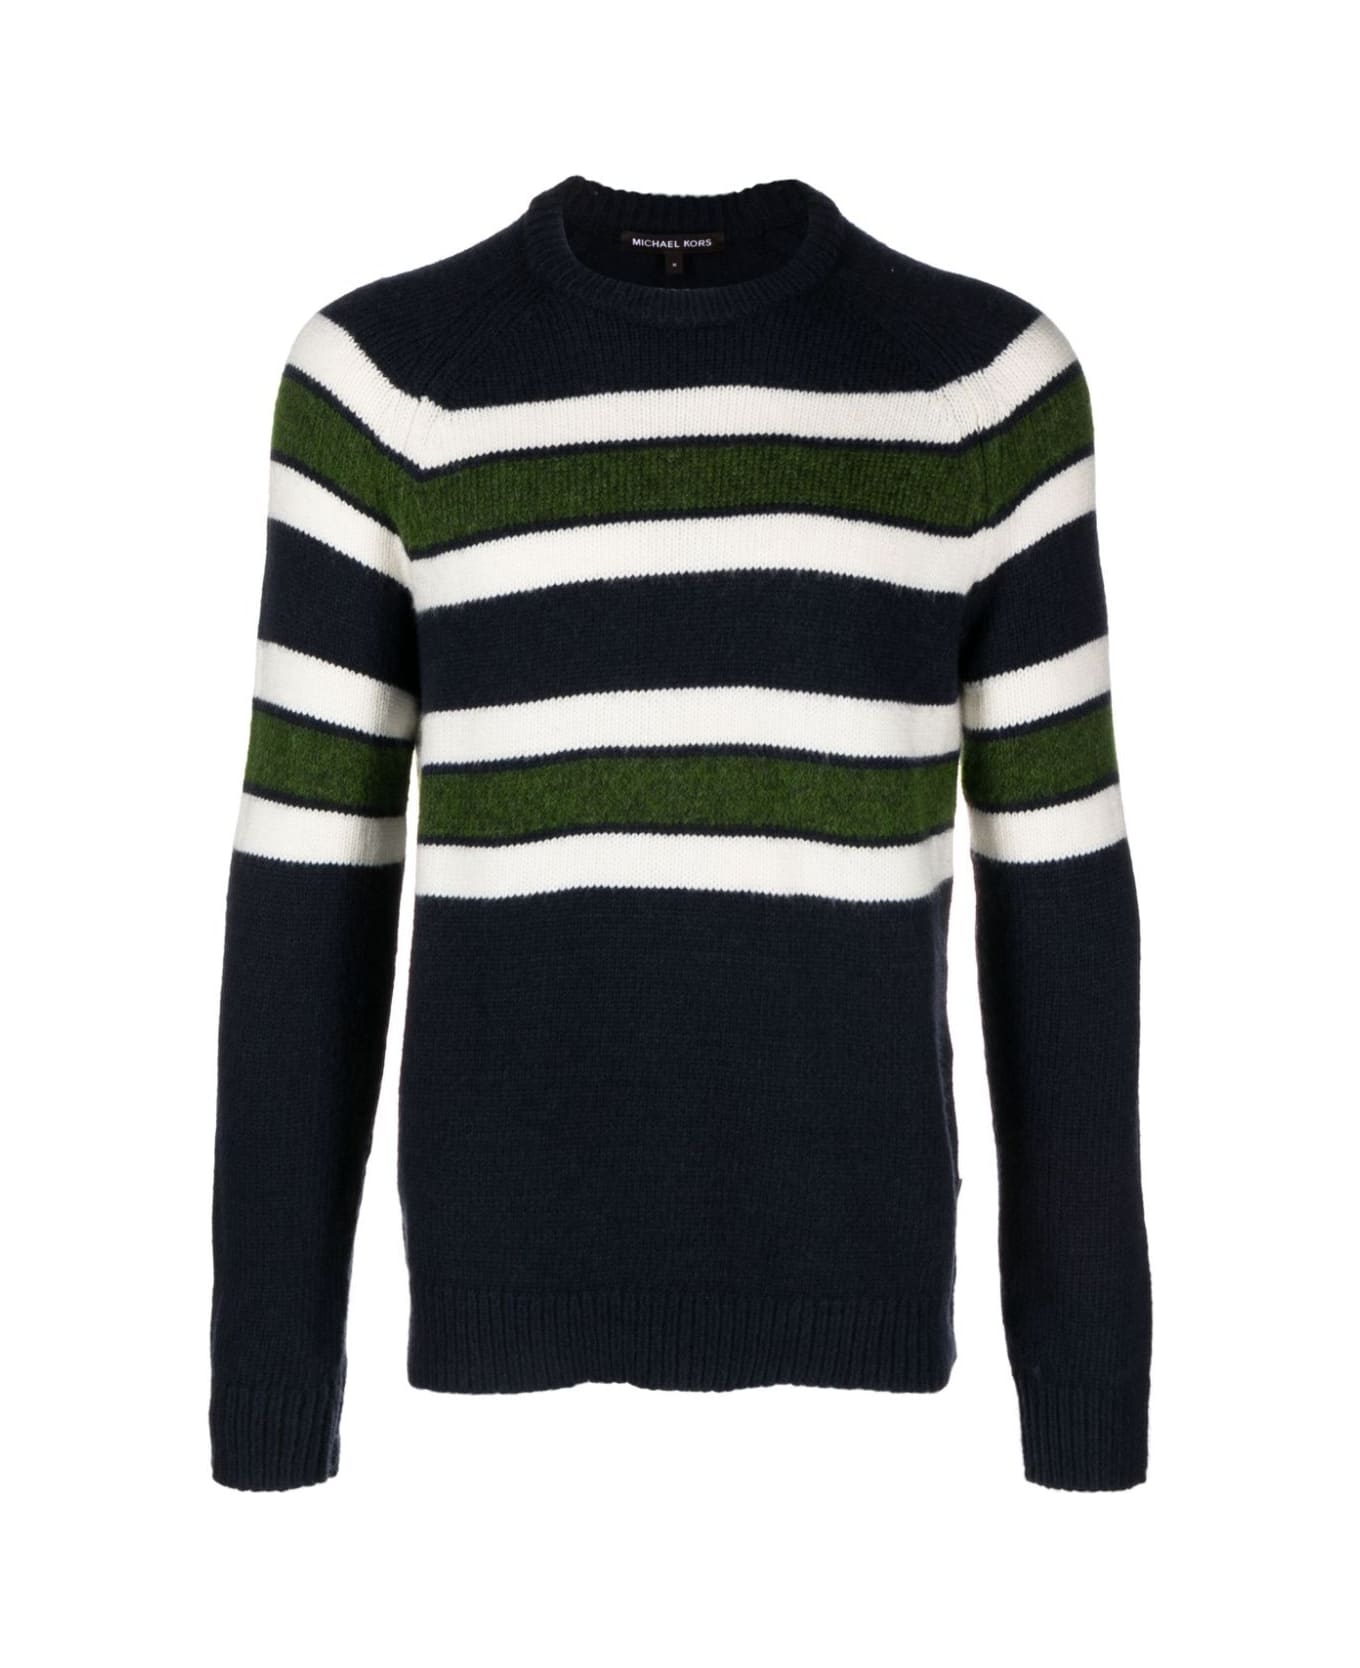 Michael Kors Brushed Stripe Crew Neck Sweater - Midnight